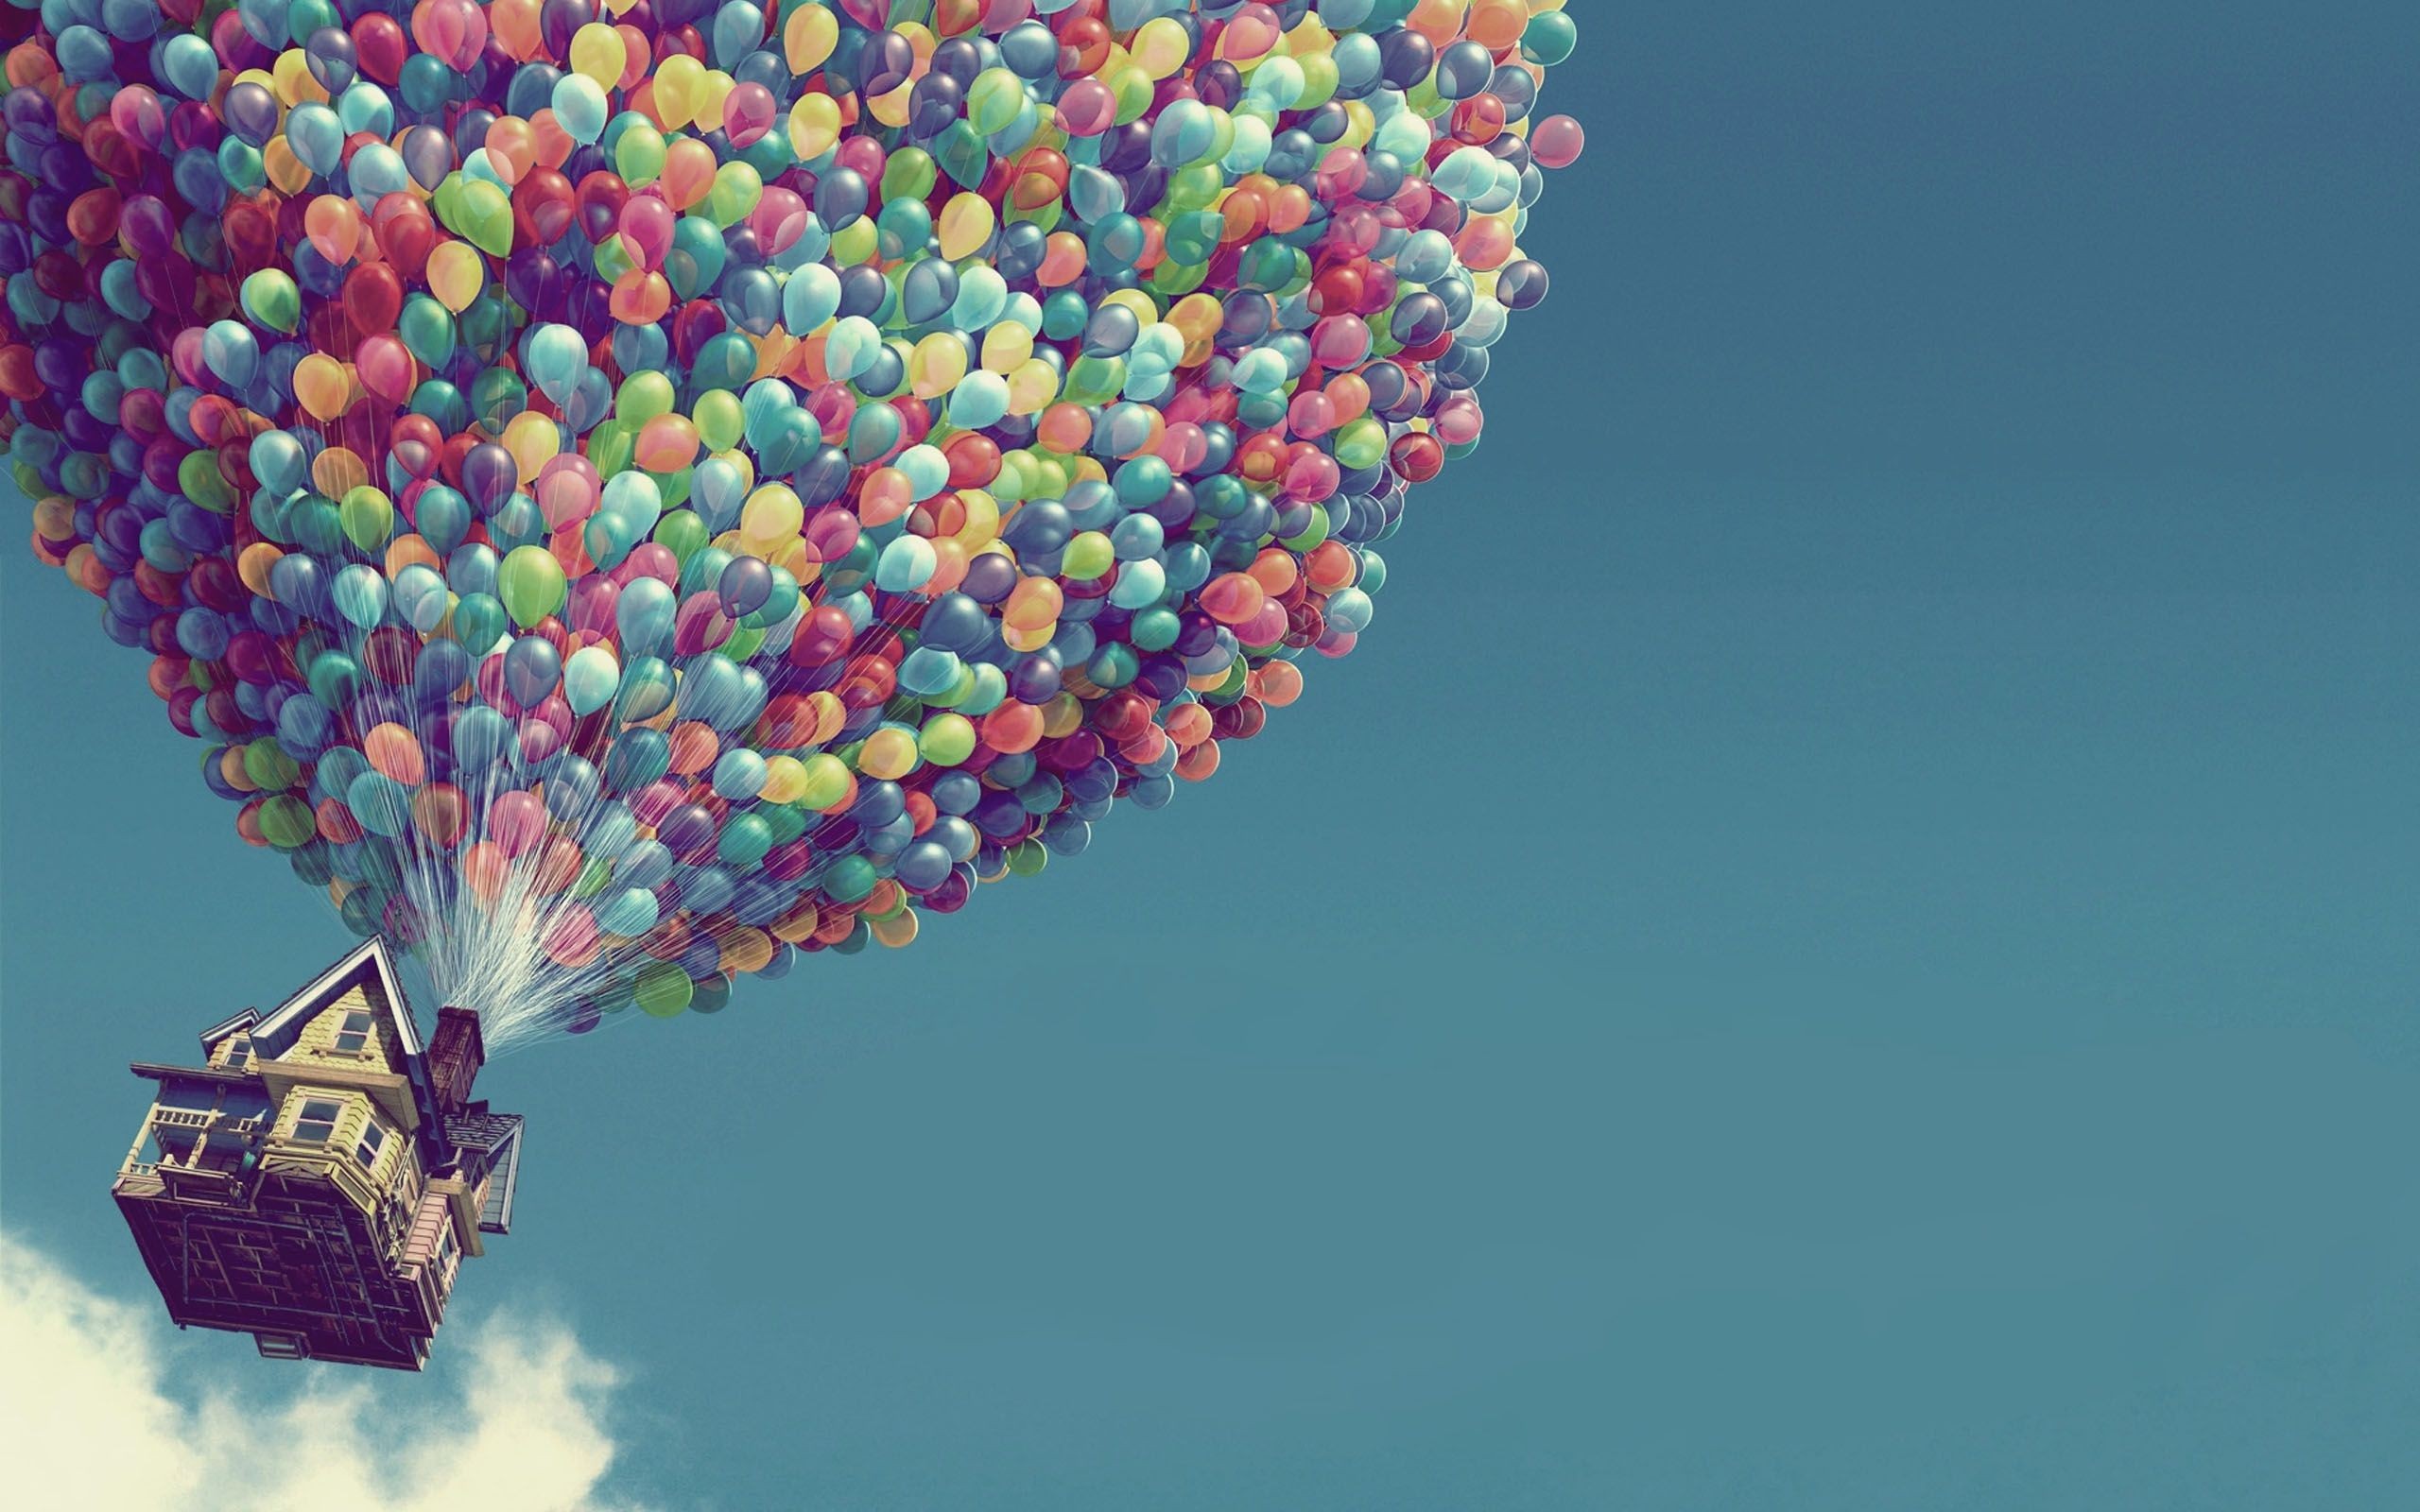 Up Movie Balloon Animated Movies Pixar Animation Studios Disney Pixar 2560x1600